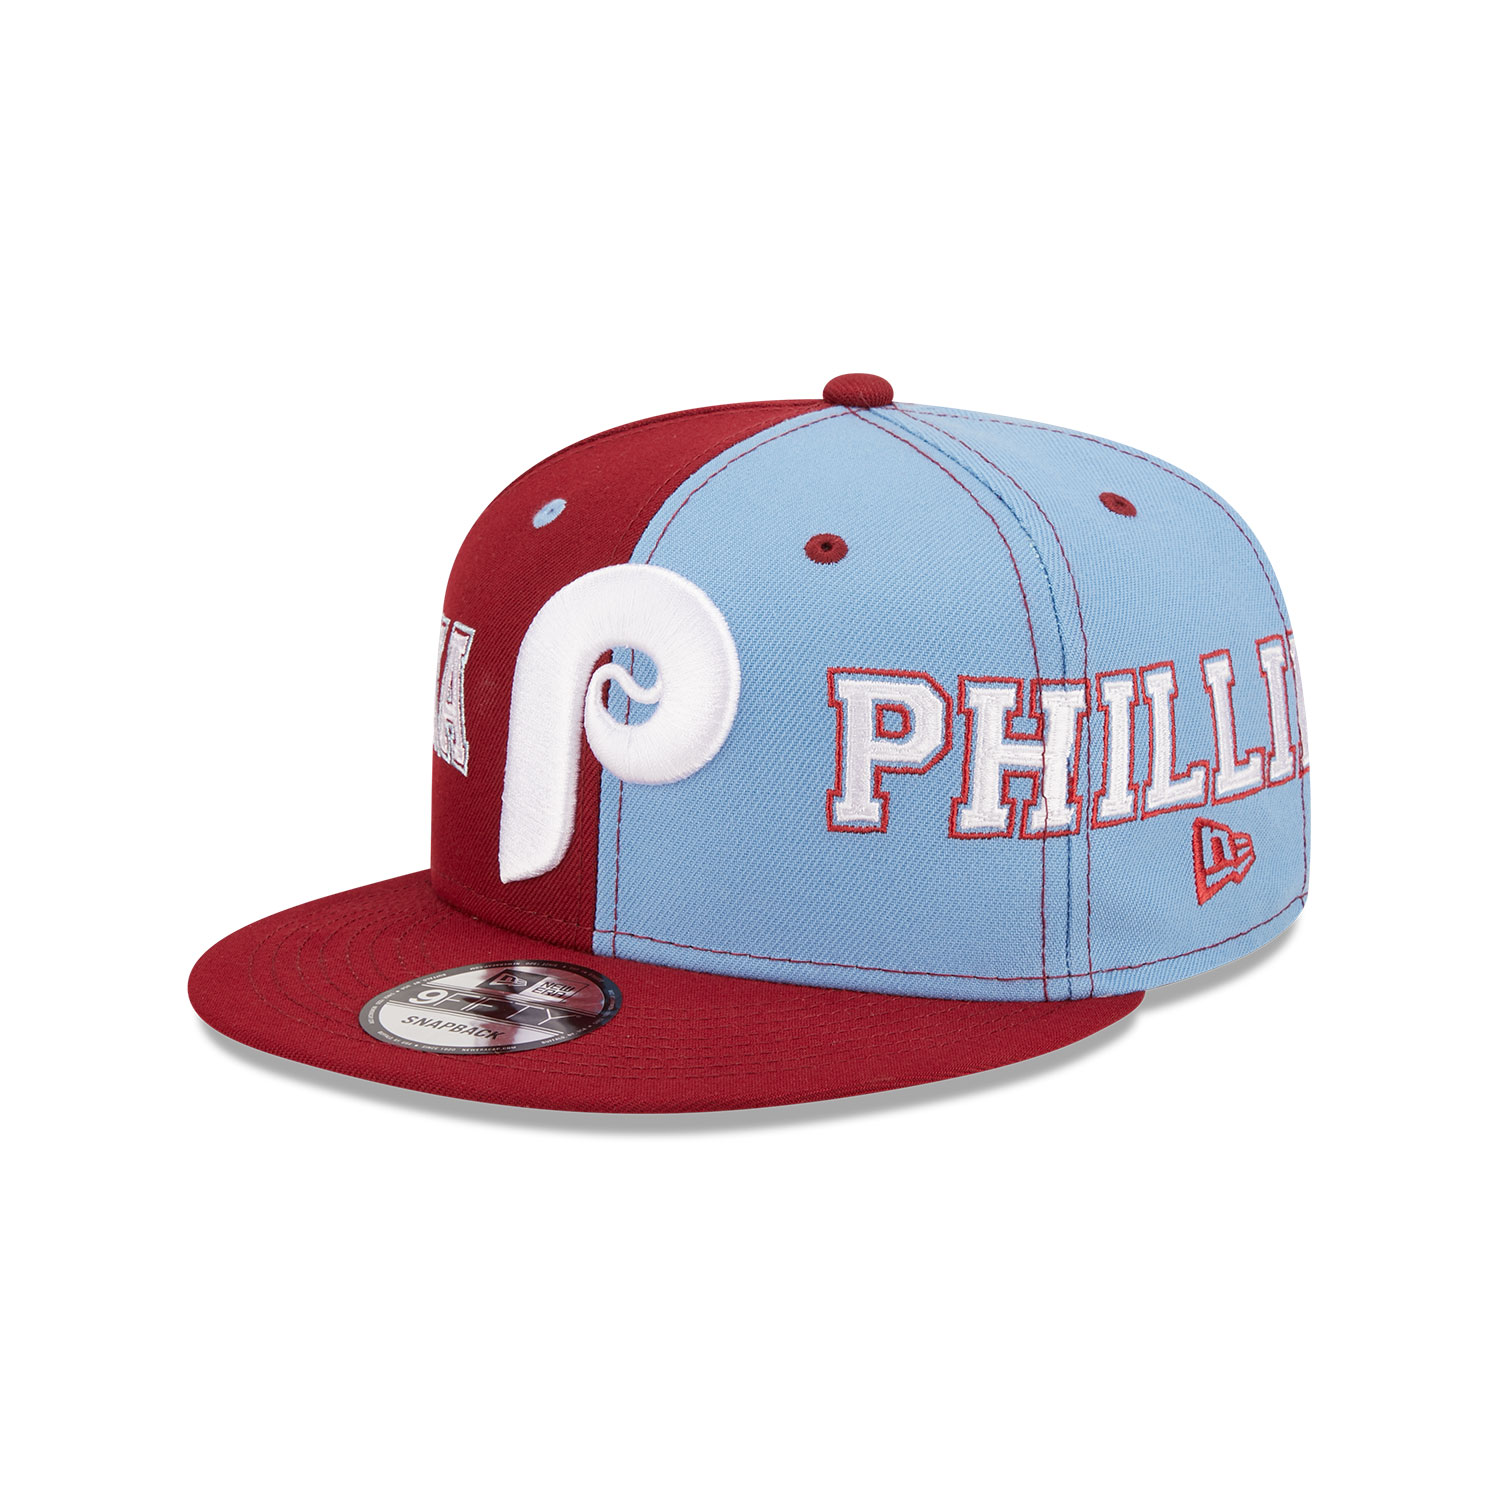 Philadelphia Phillies Teamsplit Red 9FIFTY Snapback Cap